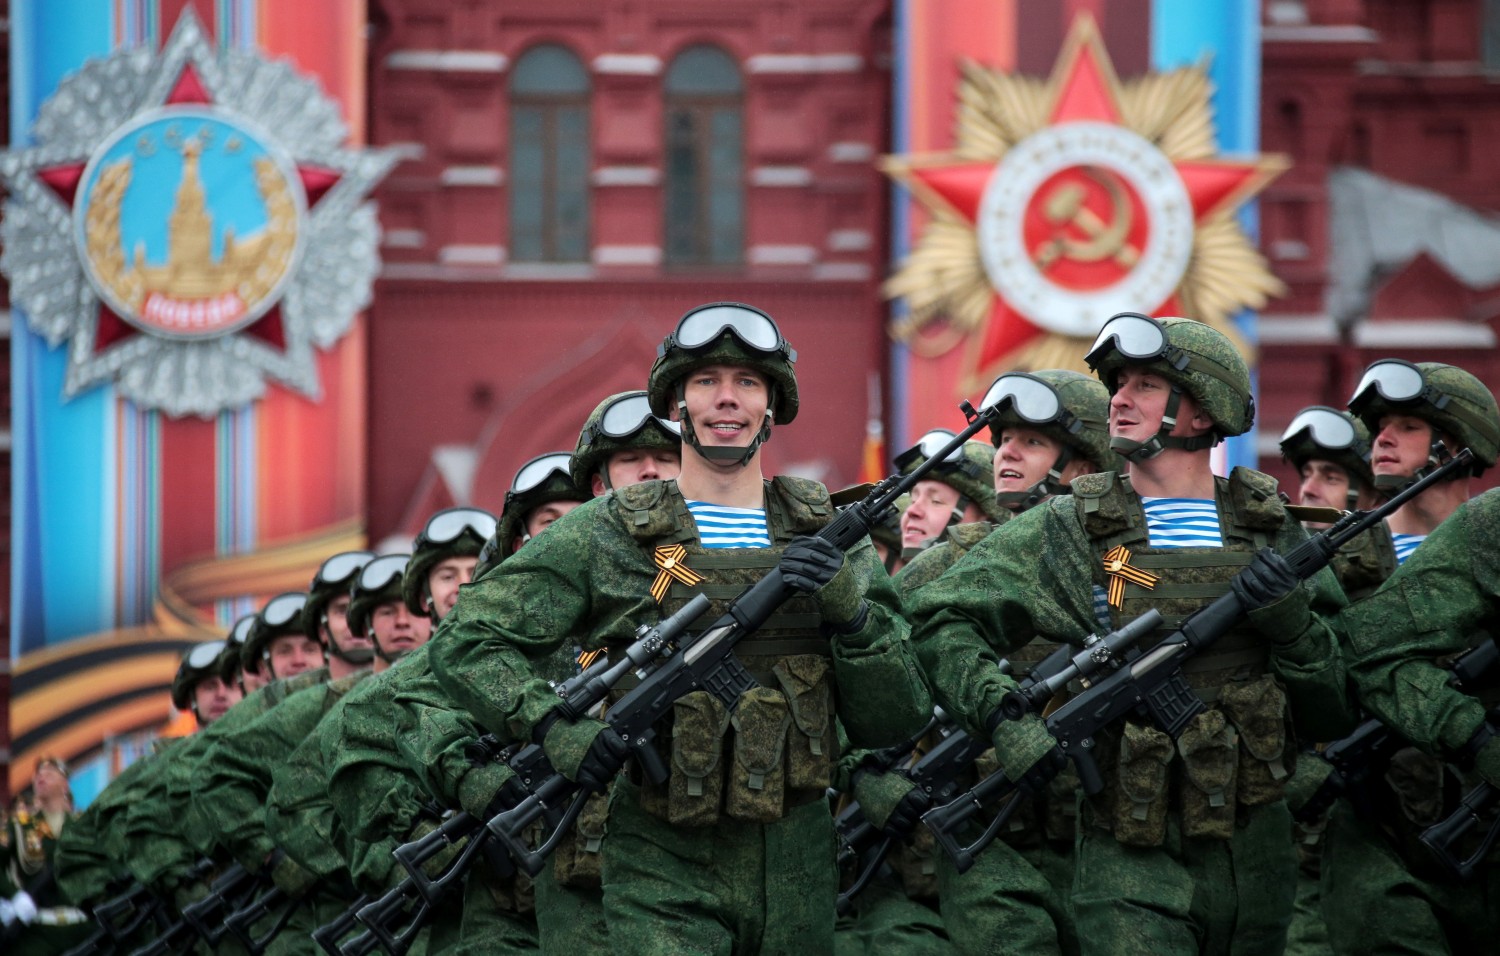 Песня солдаты на парад. Военный парад. Современная армия. Солдаты России. Солдаты на параде.